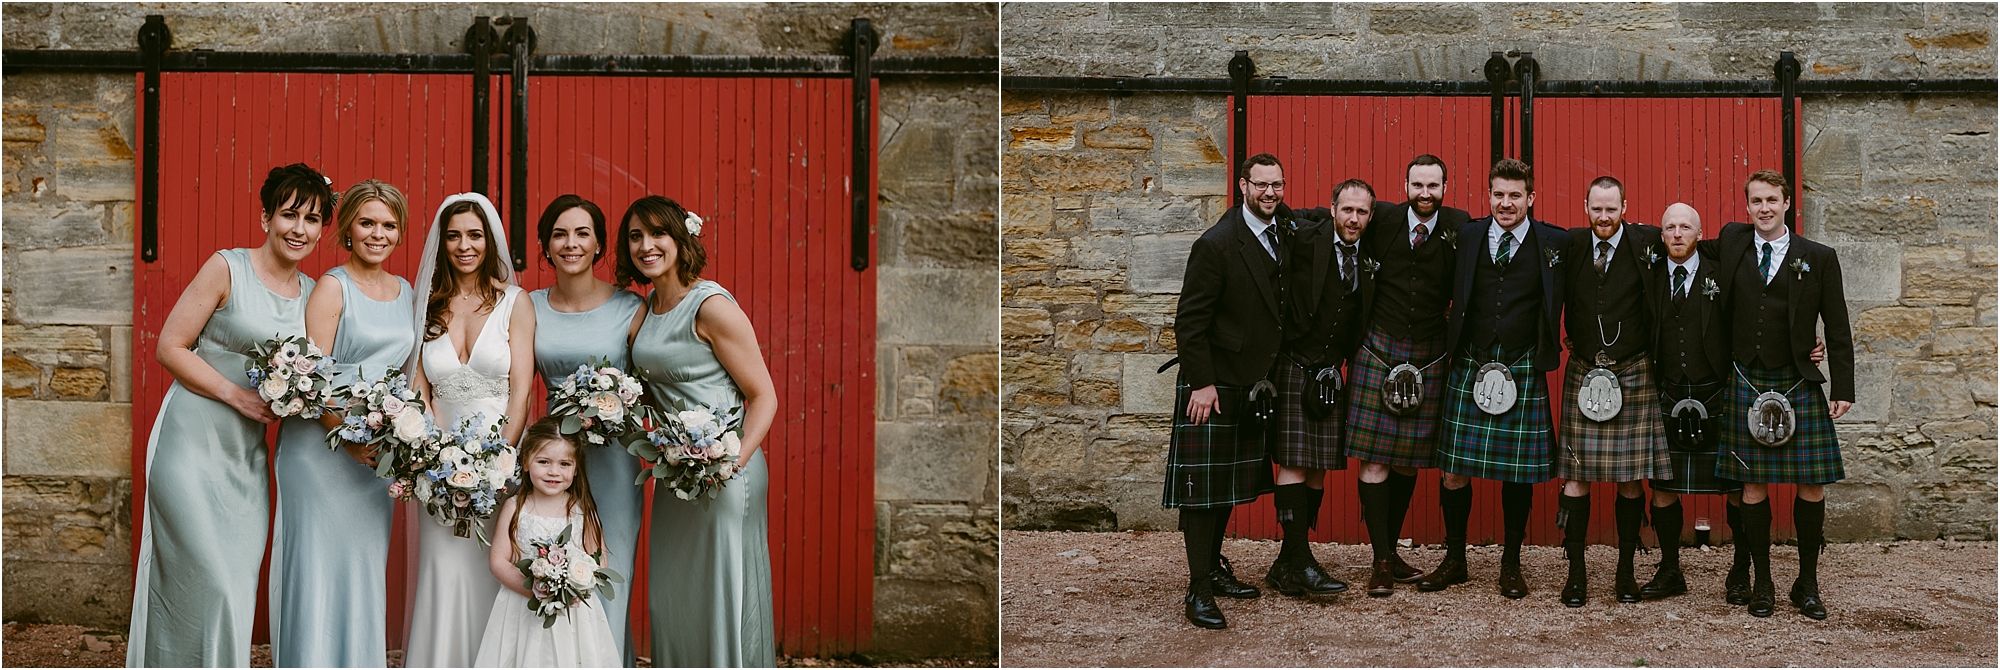 Scott+Joanna-Kinkell-Byre-wedding-fife-photography__0071.jpg